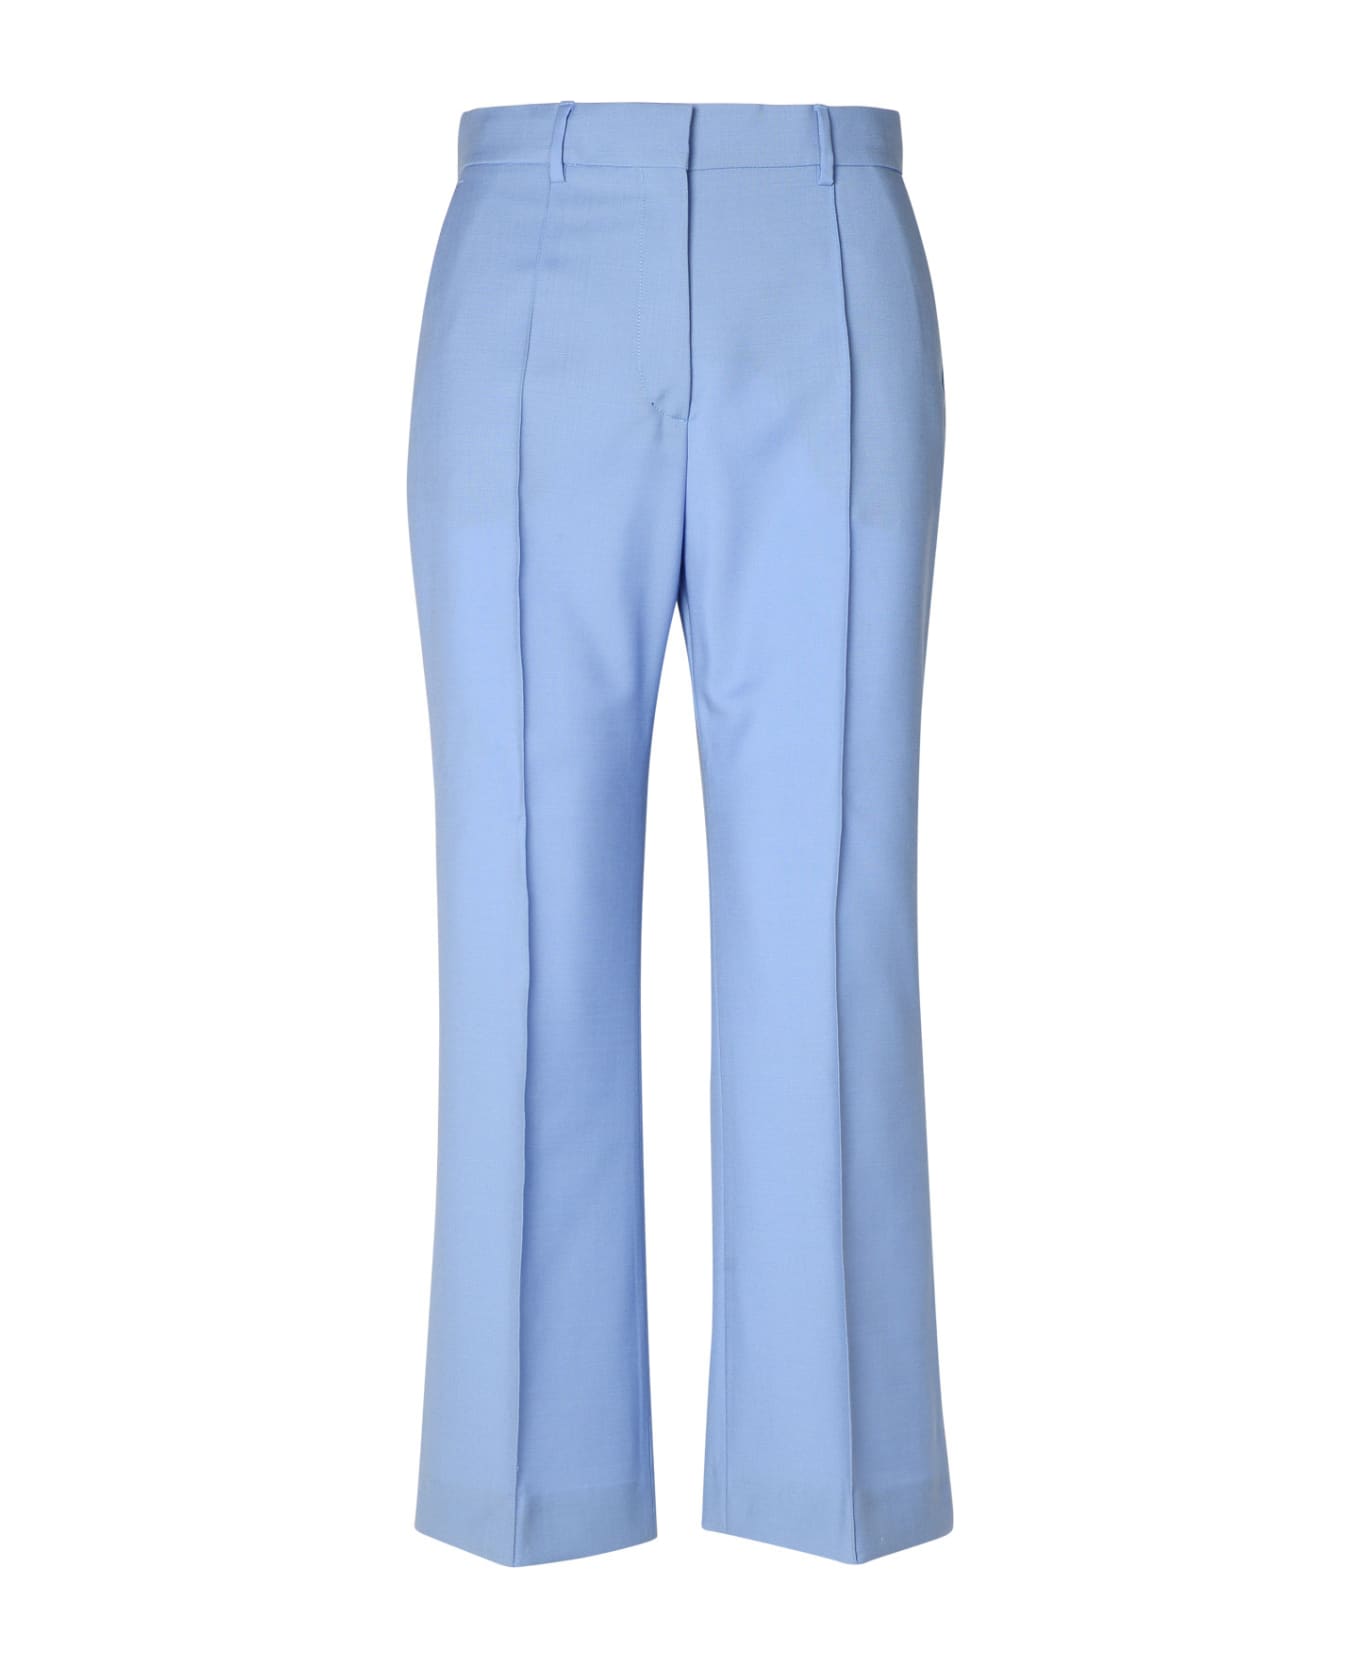 Lanvin Light Blue Virgin Wool Trousers - Light Blue